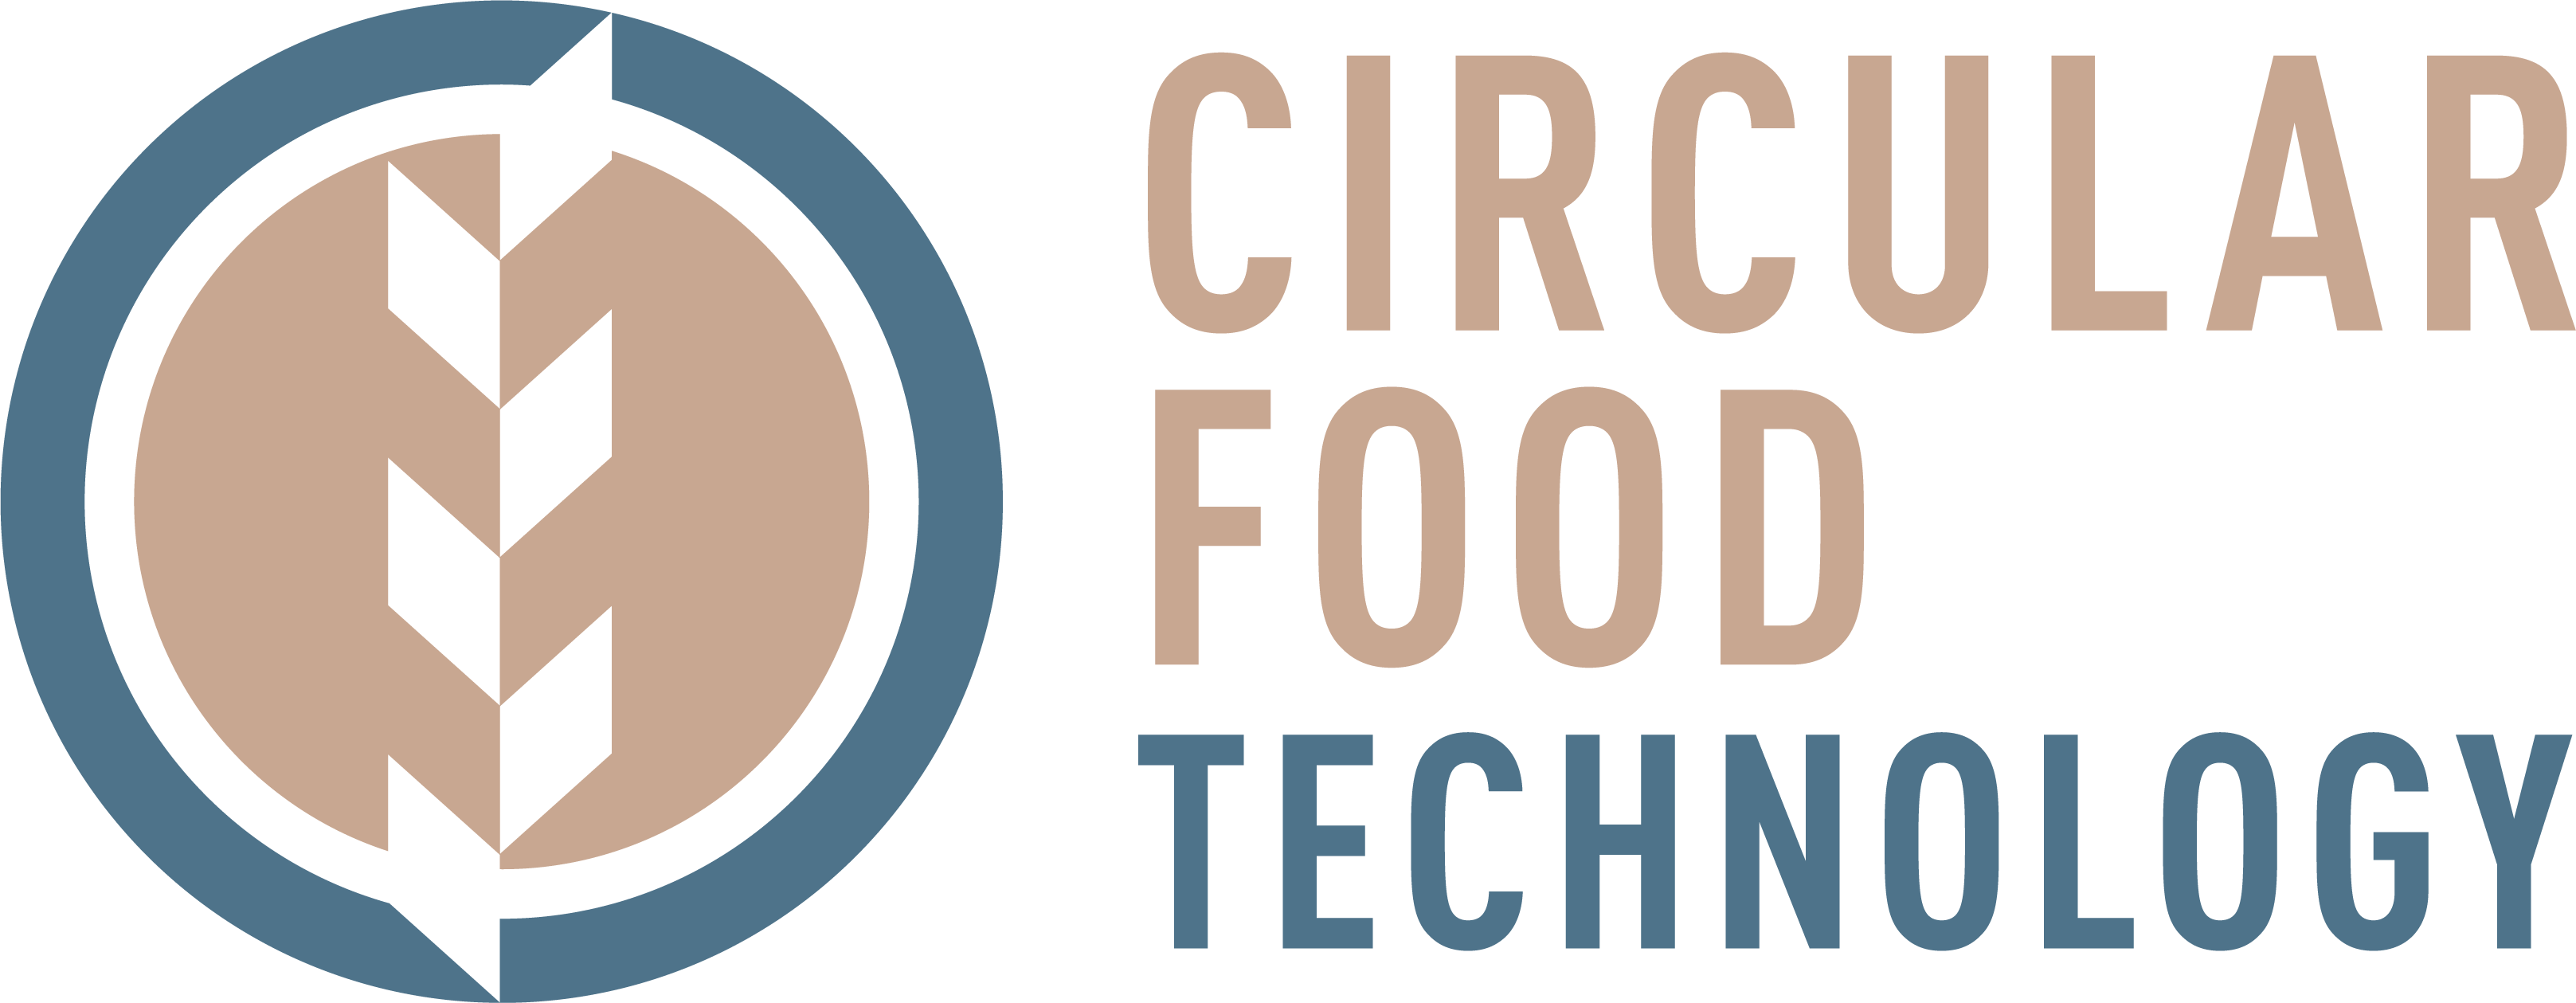 Circular Food Technology